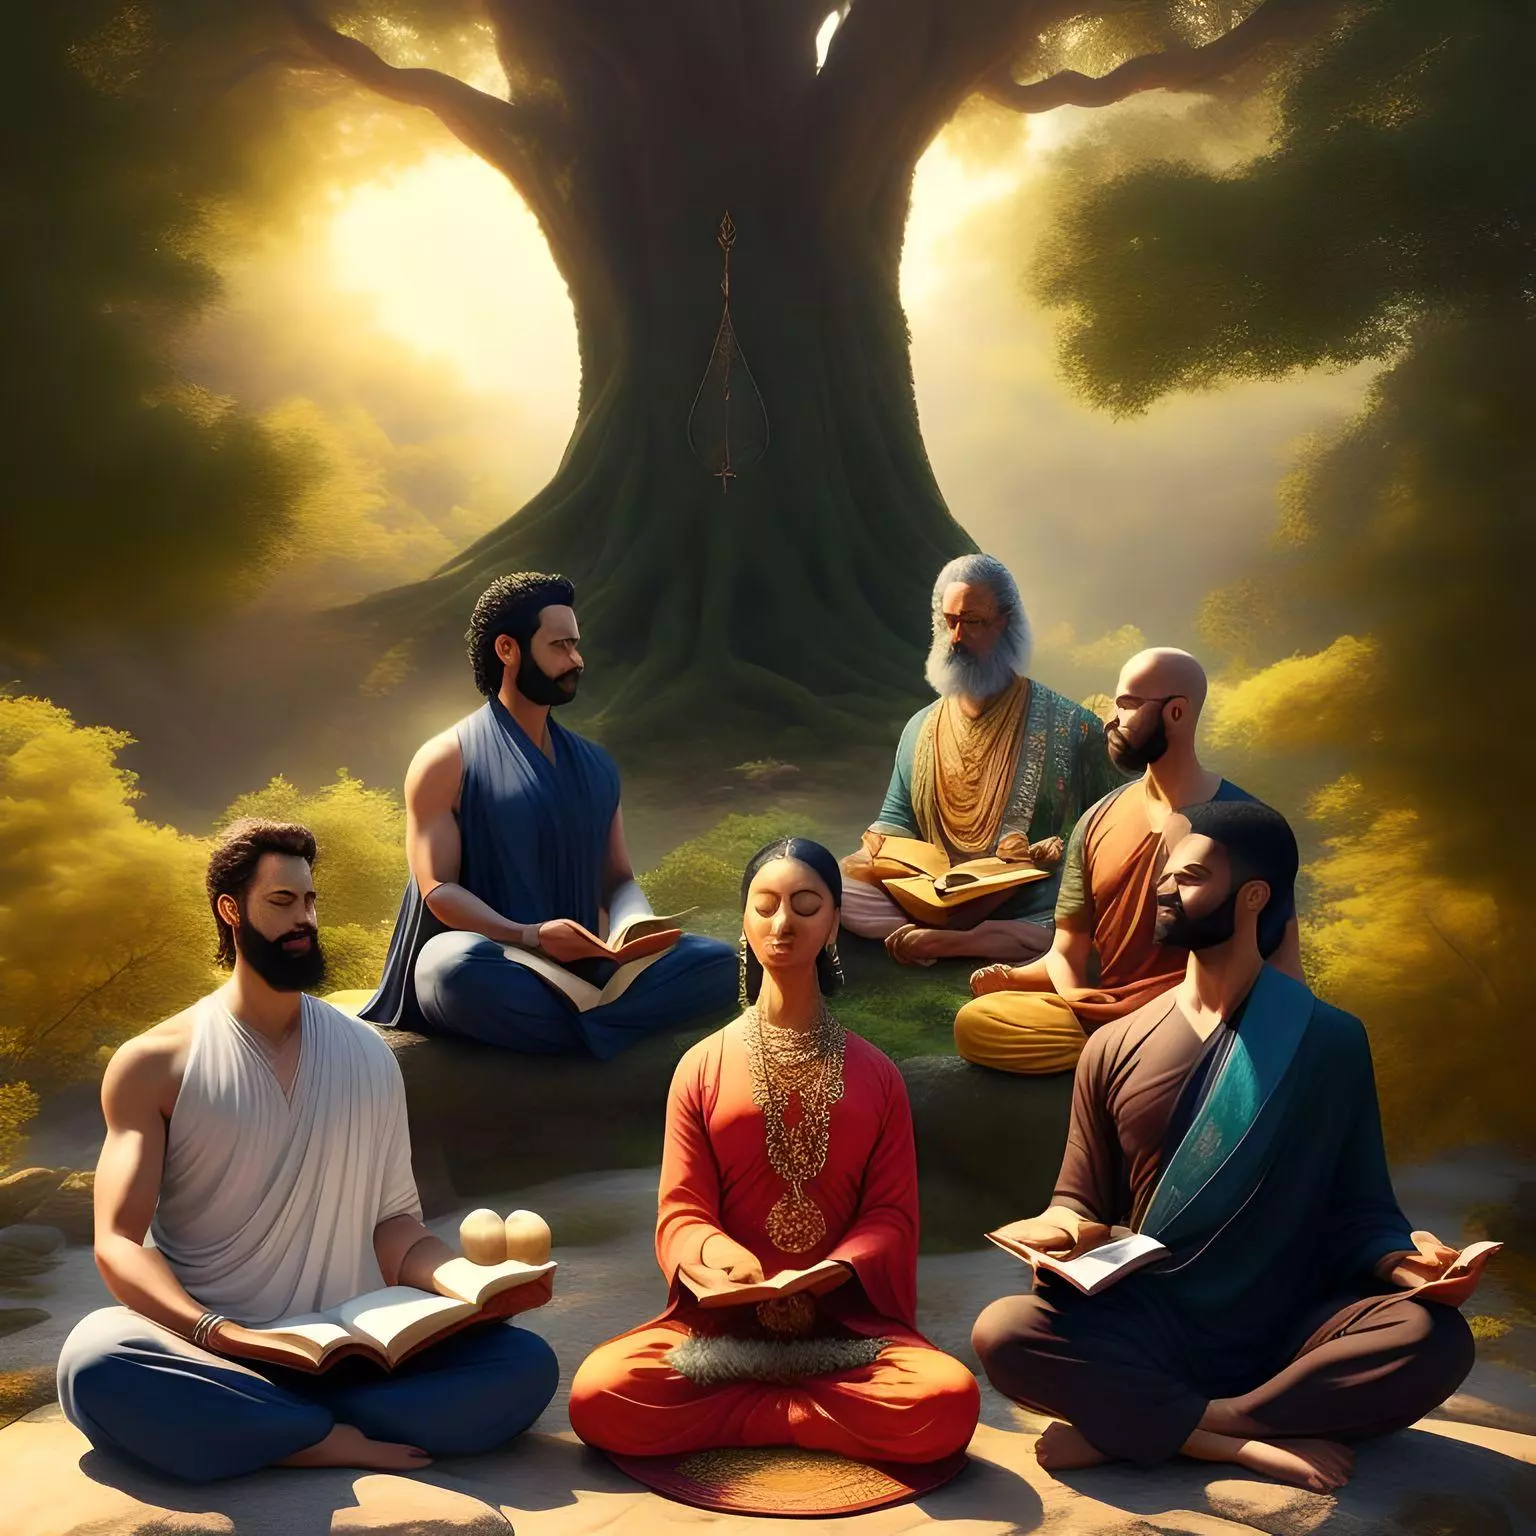 6 individuals of different origins meditating under a tree